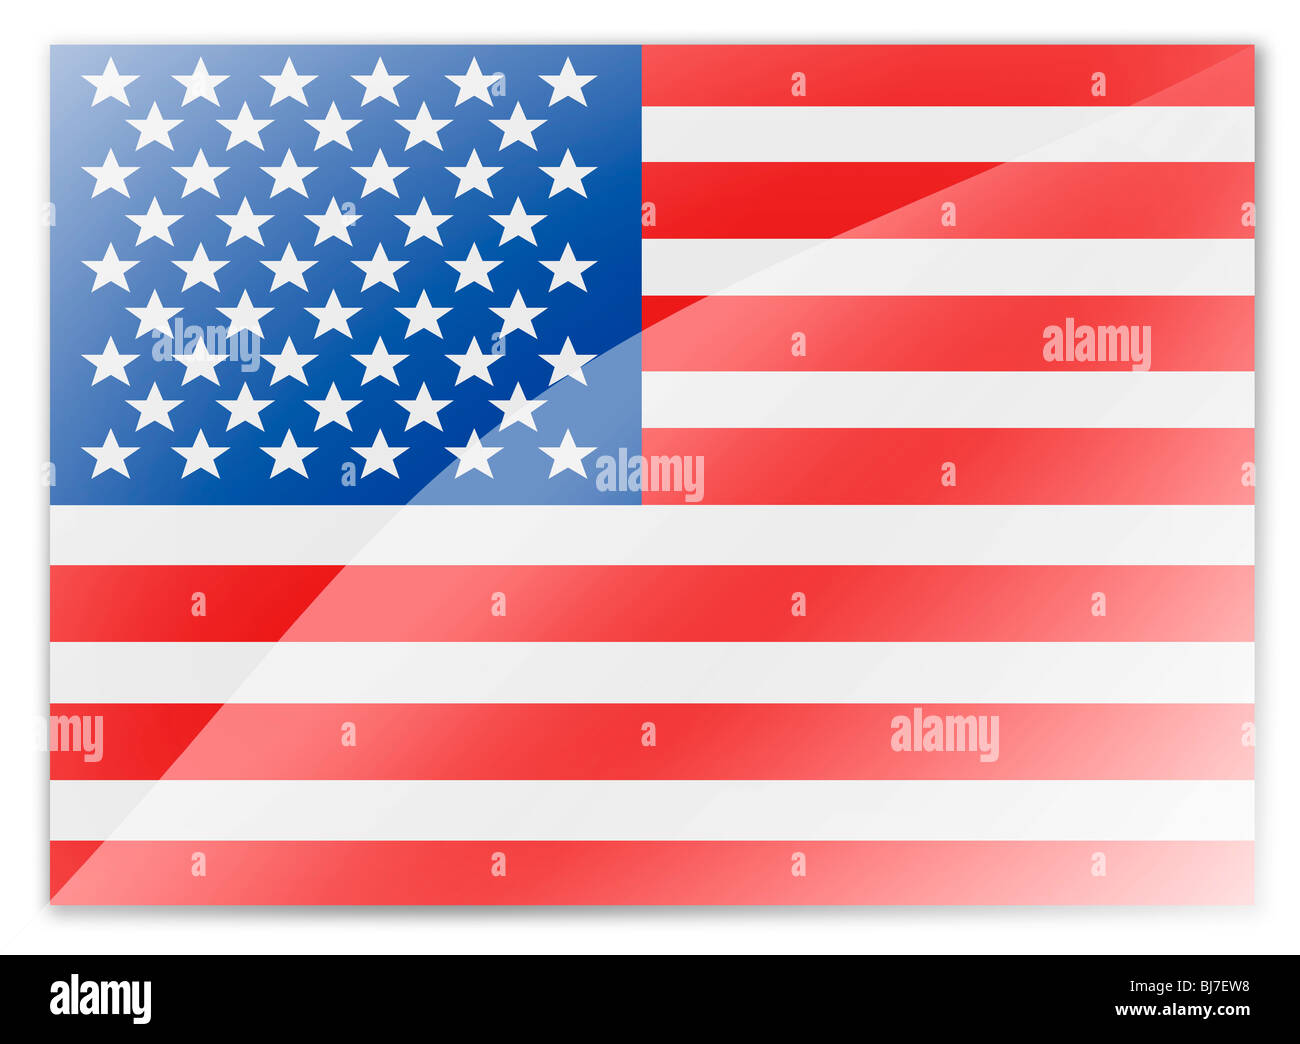 USA US United State of America flag Stock Photo